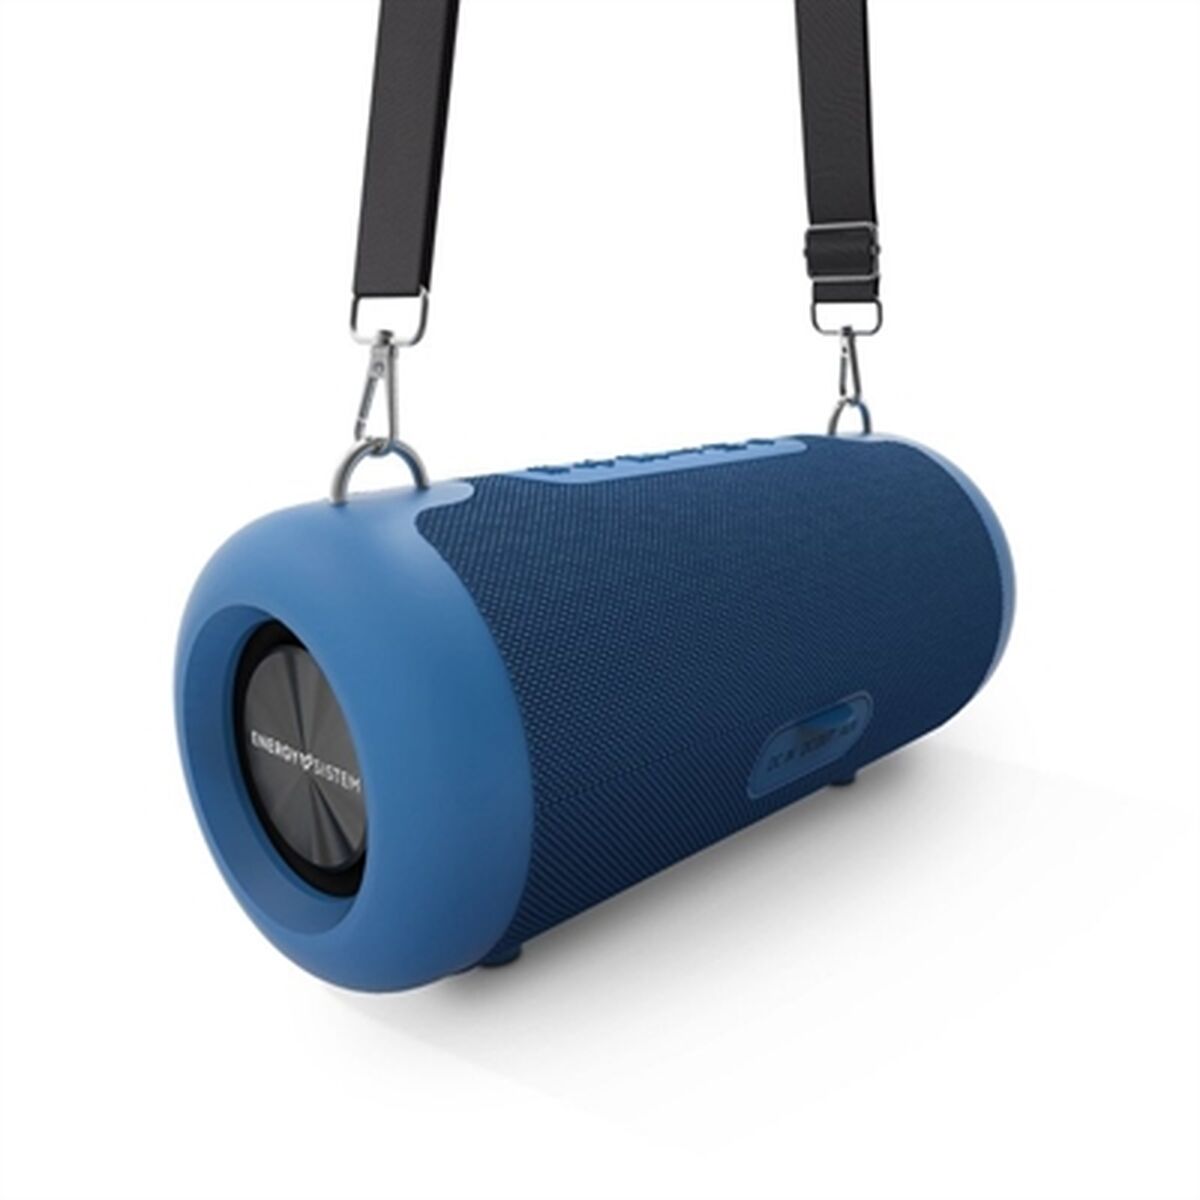 Difuzor Bluetooth Portabil Energy Sistem Urban Box 6 Albastru 40 W